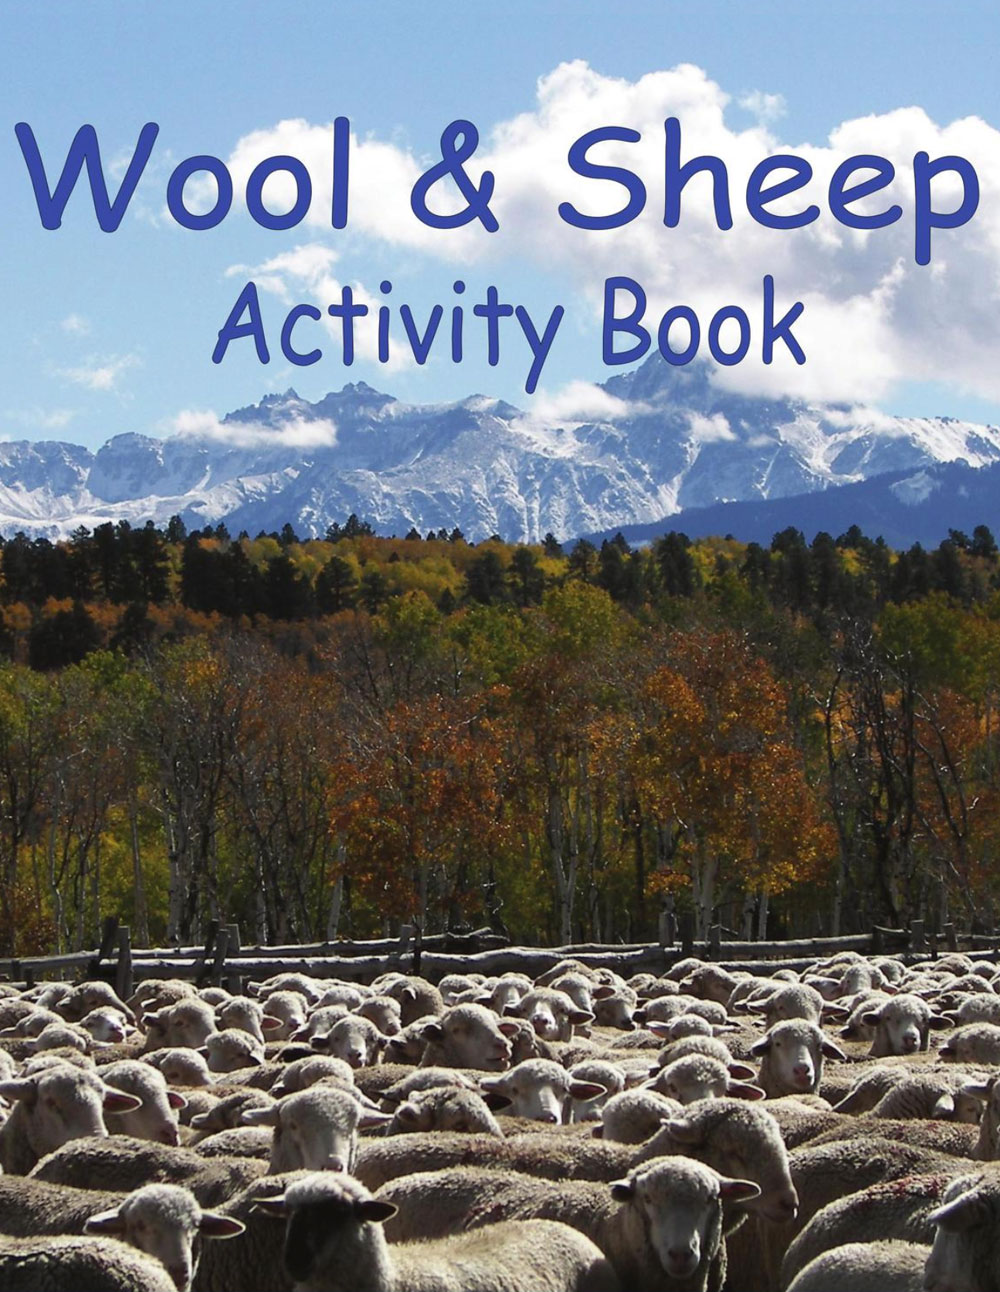 Wool & Sheep Activity Book